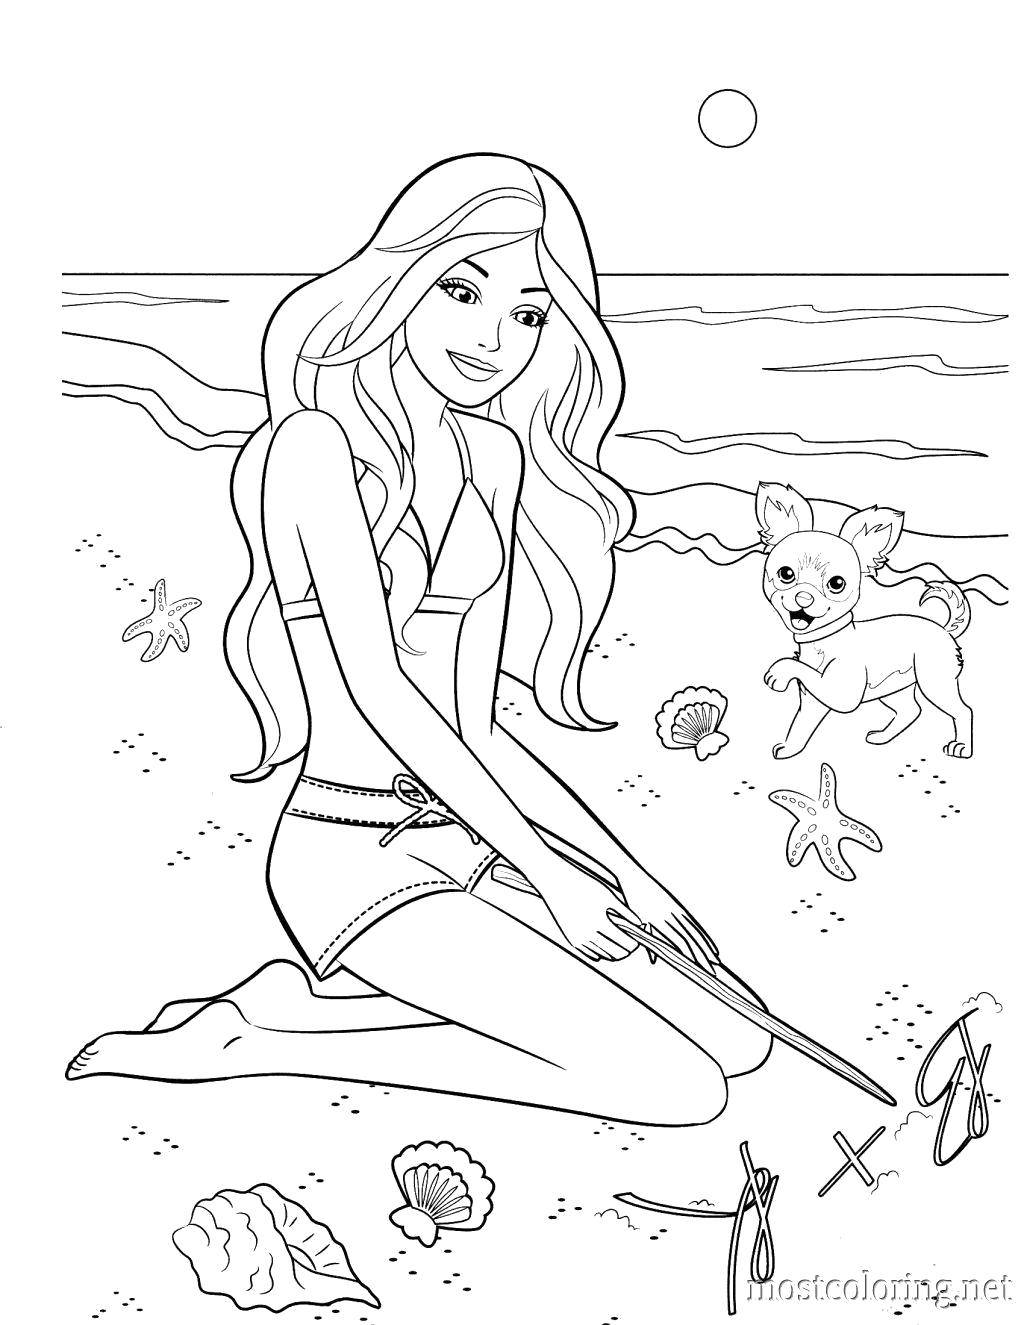 Название: Раскраска Барби на пляже. Категория: Барби. Теги: Барби, пляж, лето, отдых.